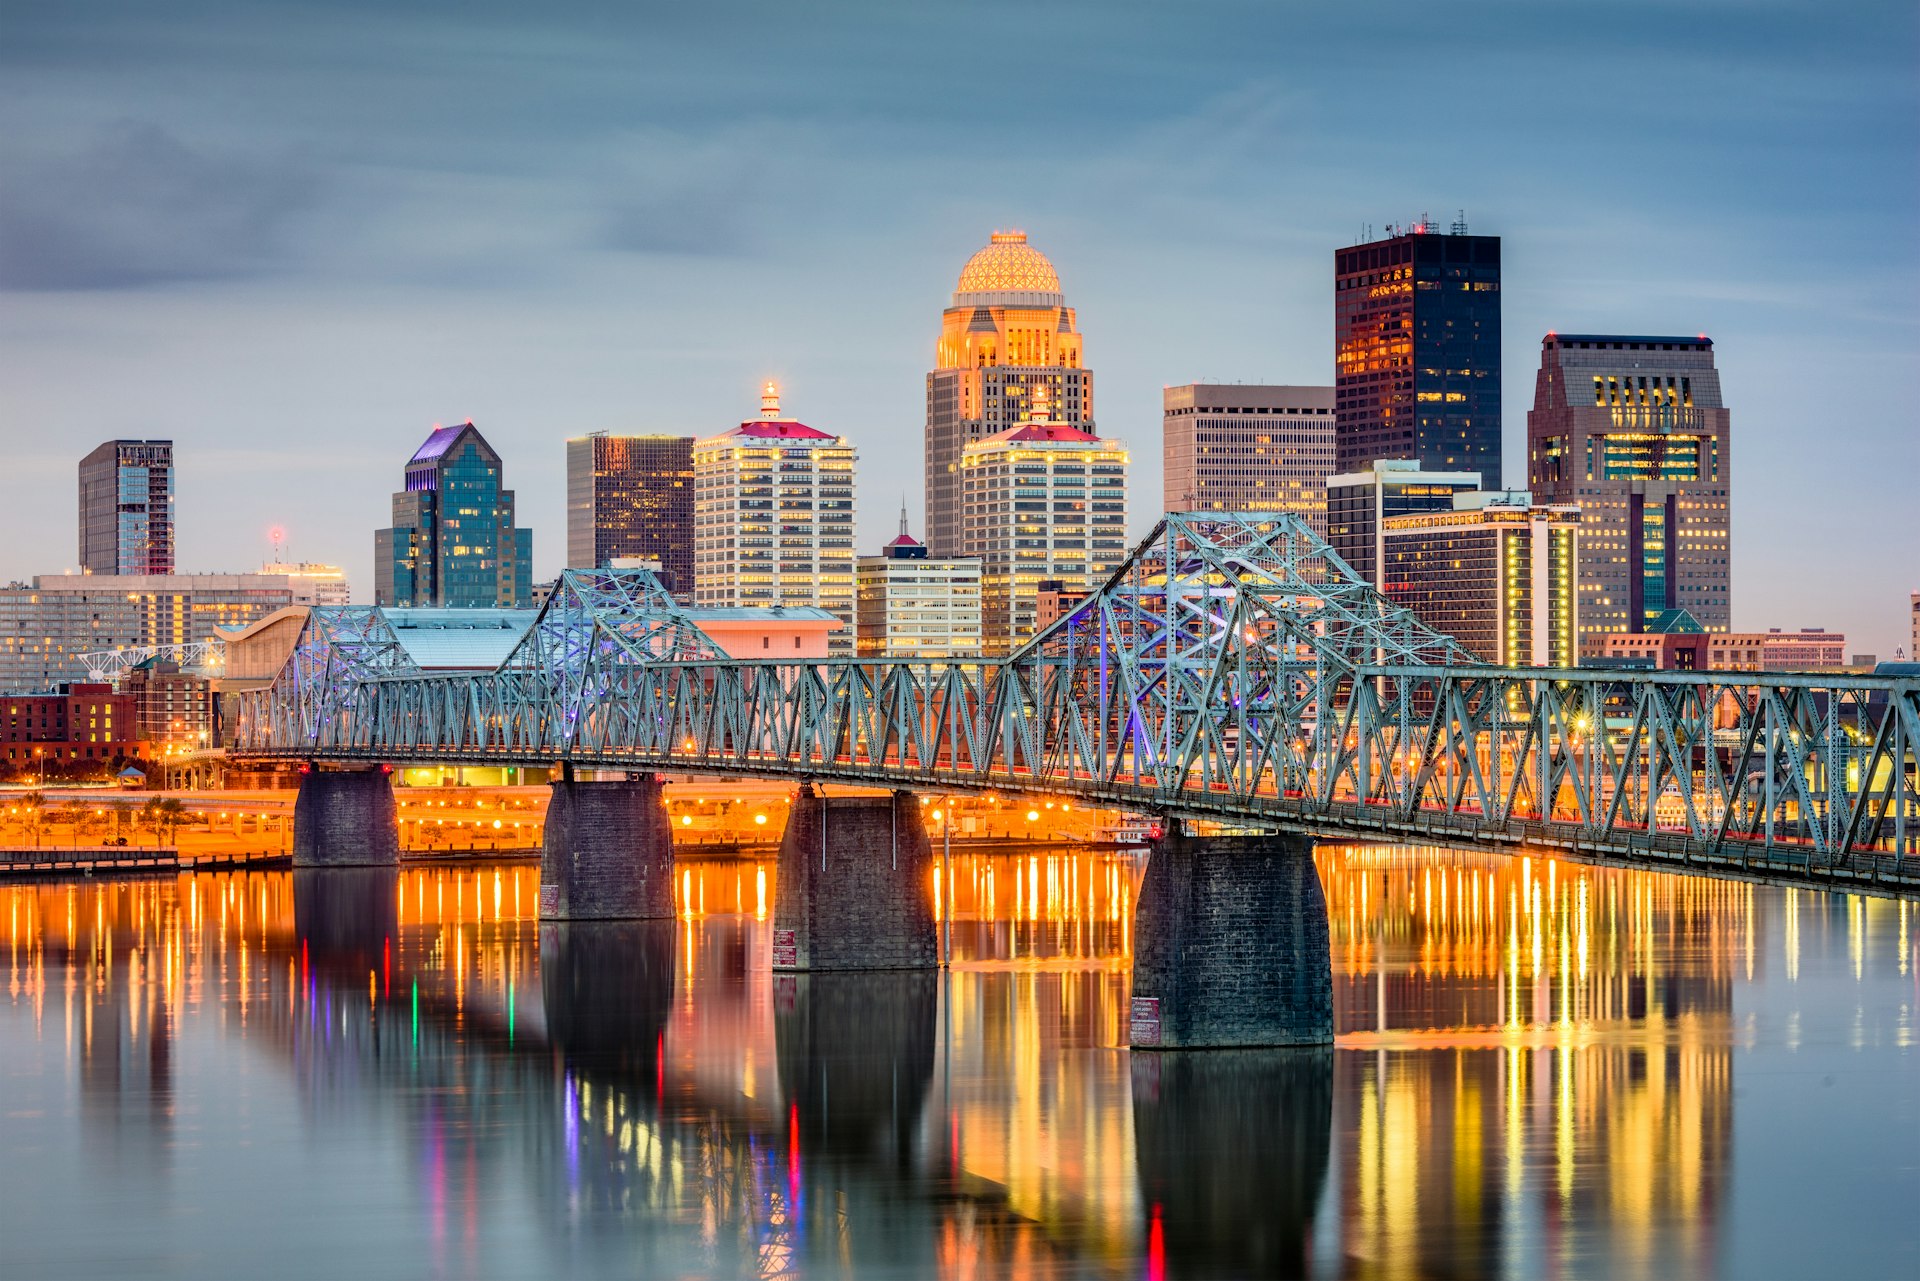 The skyline of Louisville, Kentucky, with the George Rogers Clark Memorial Bridge